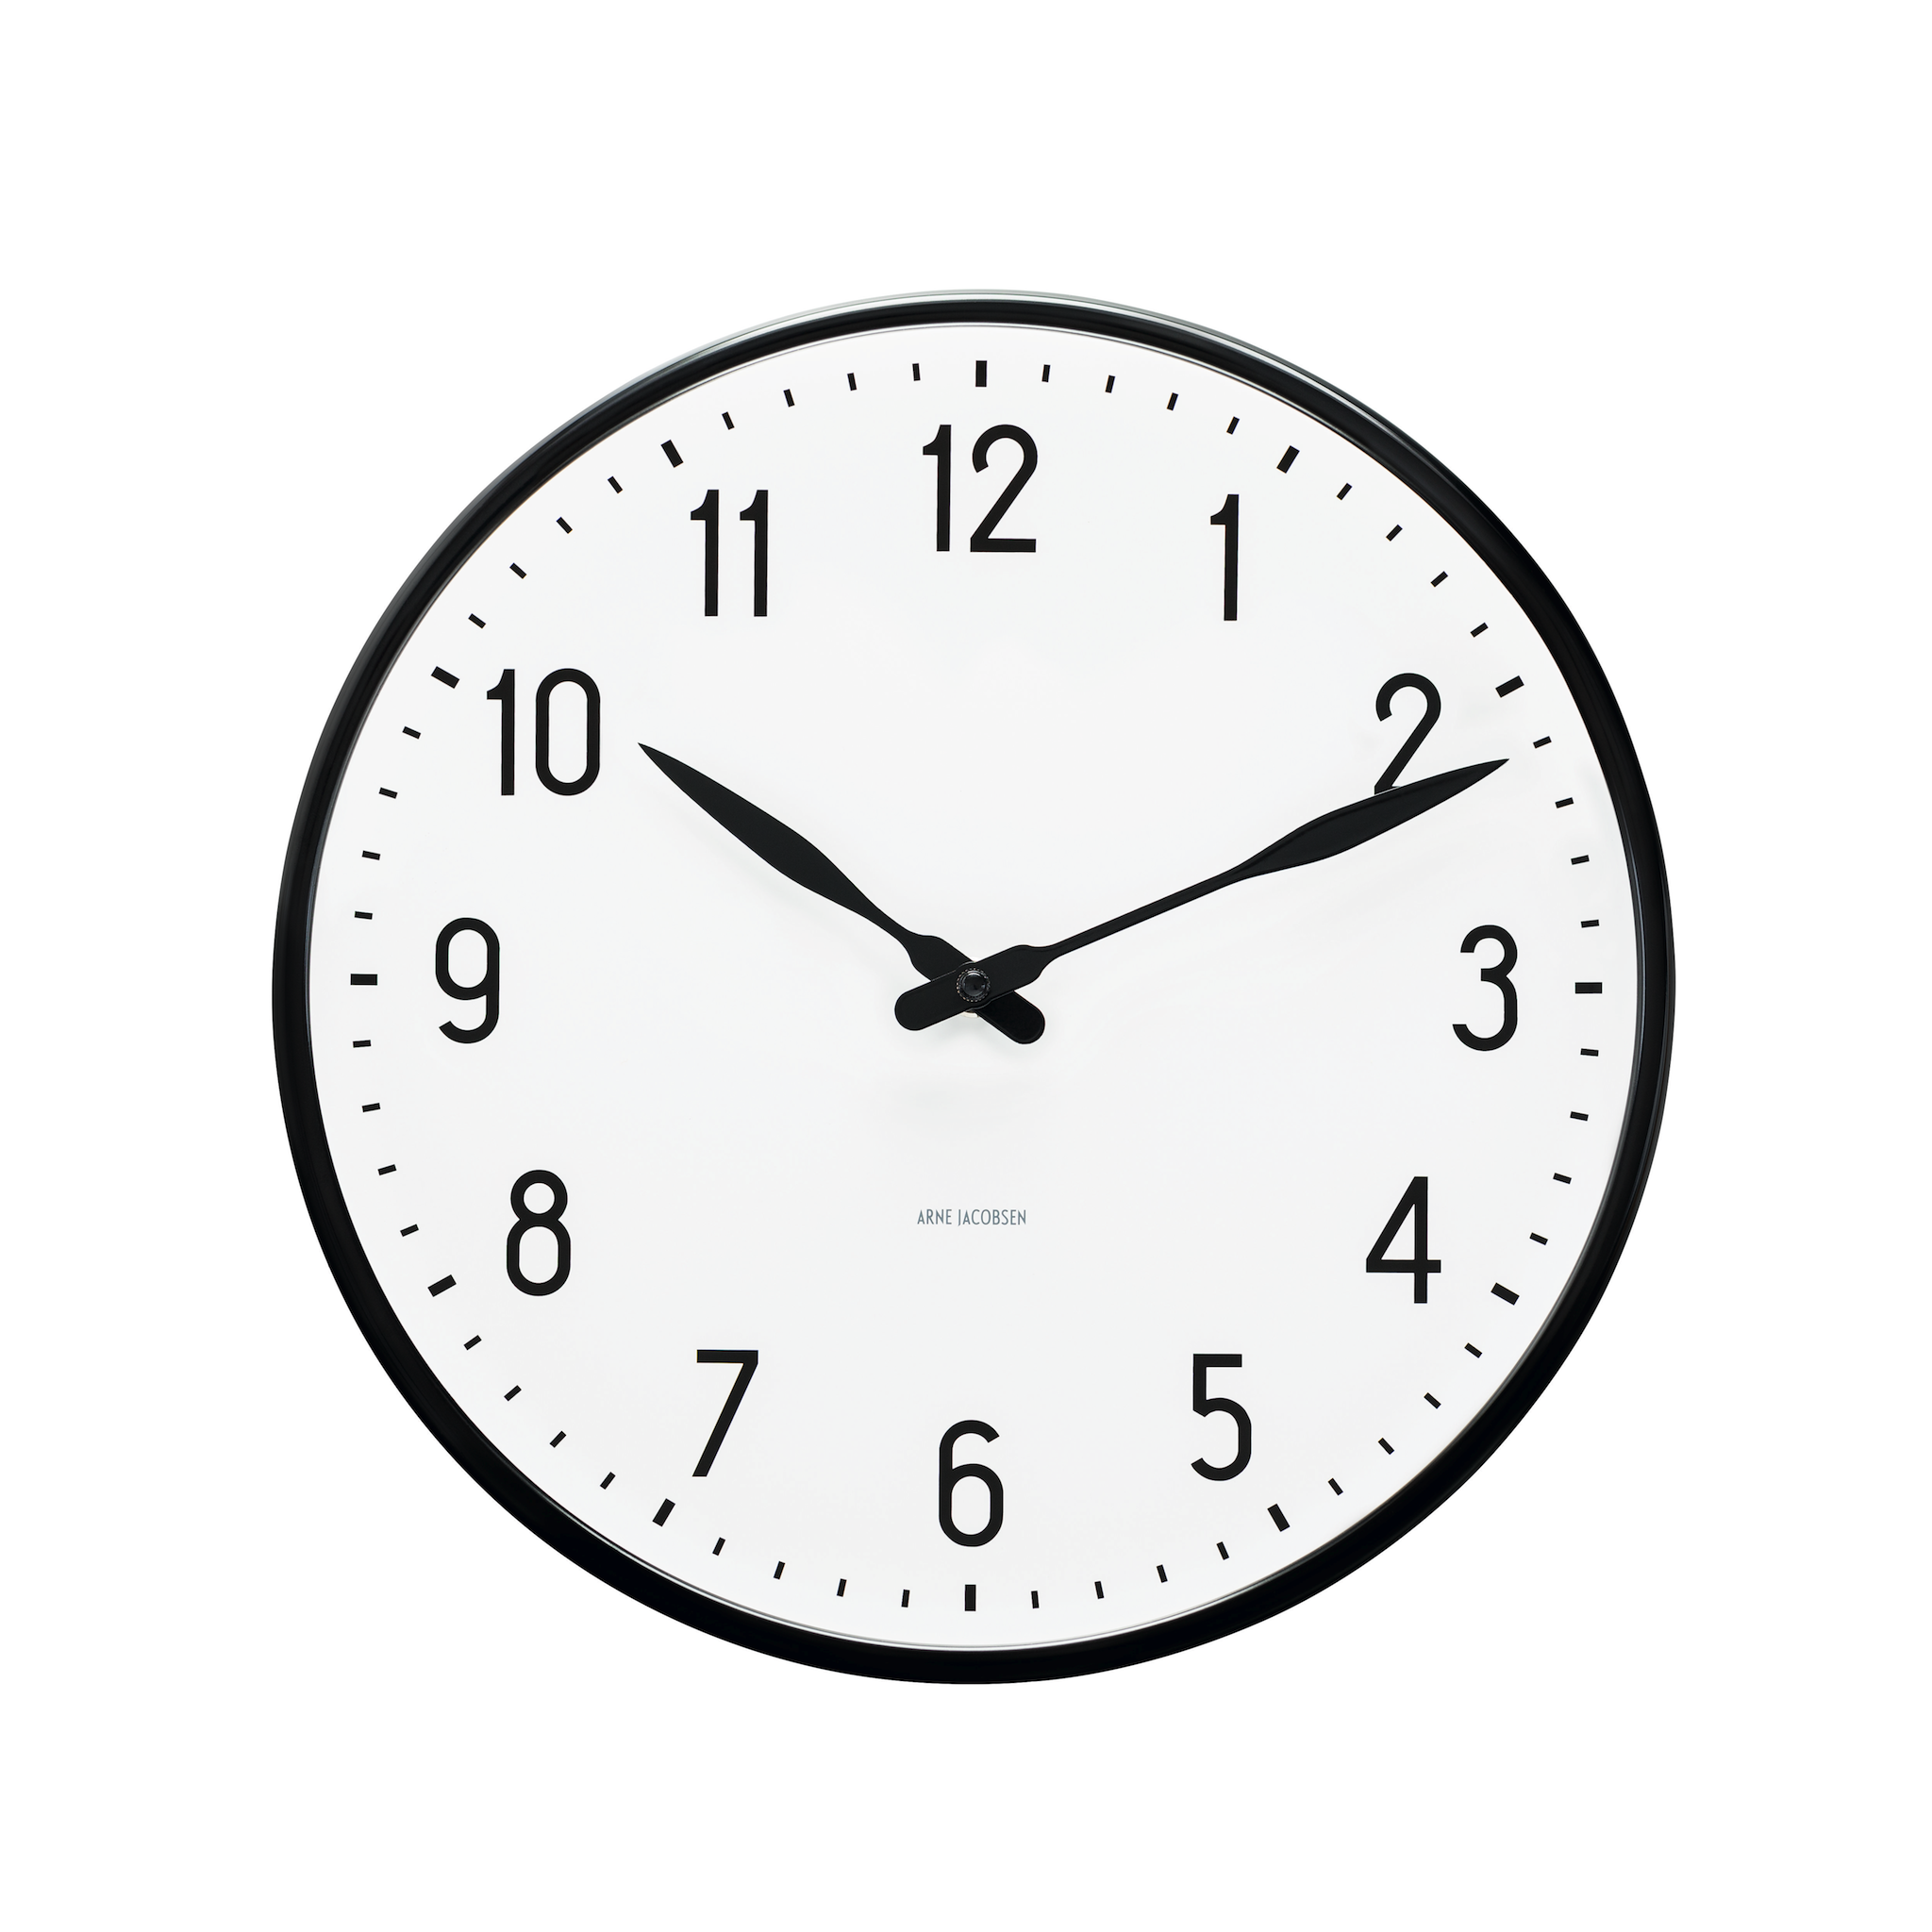 Arne Jacobsen Station Wall Clock, 19" / 48 cm